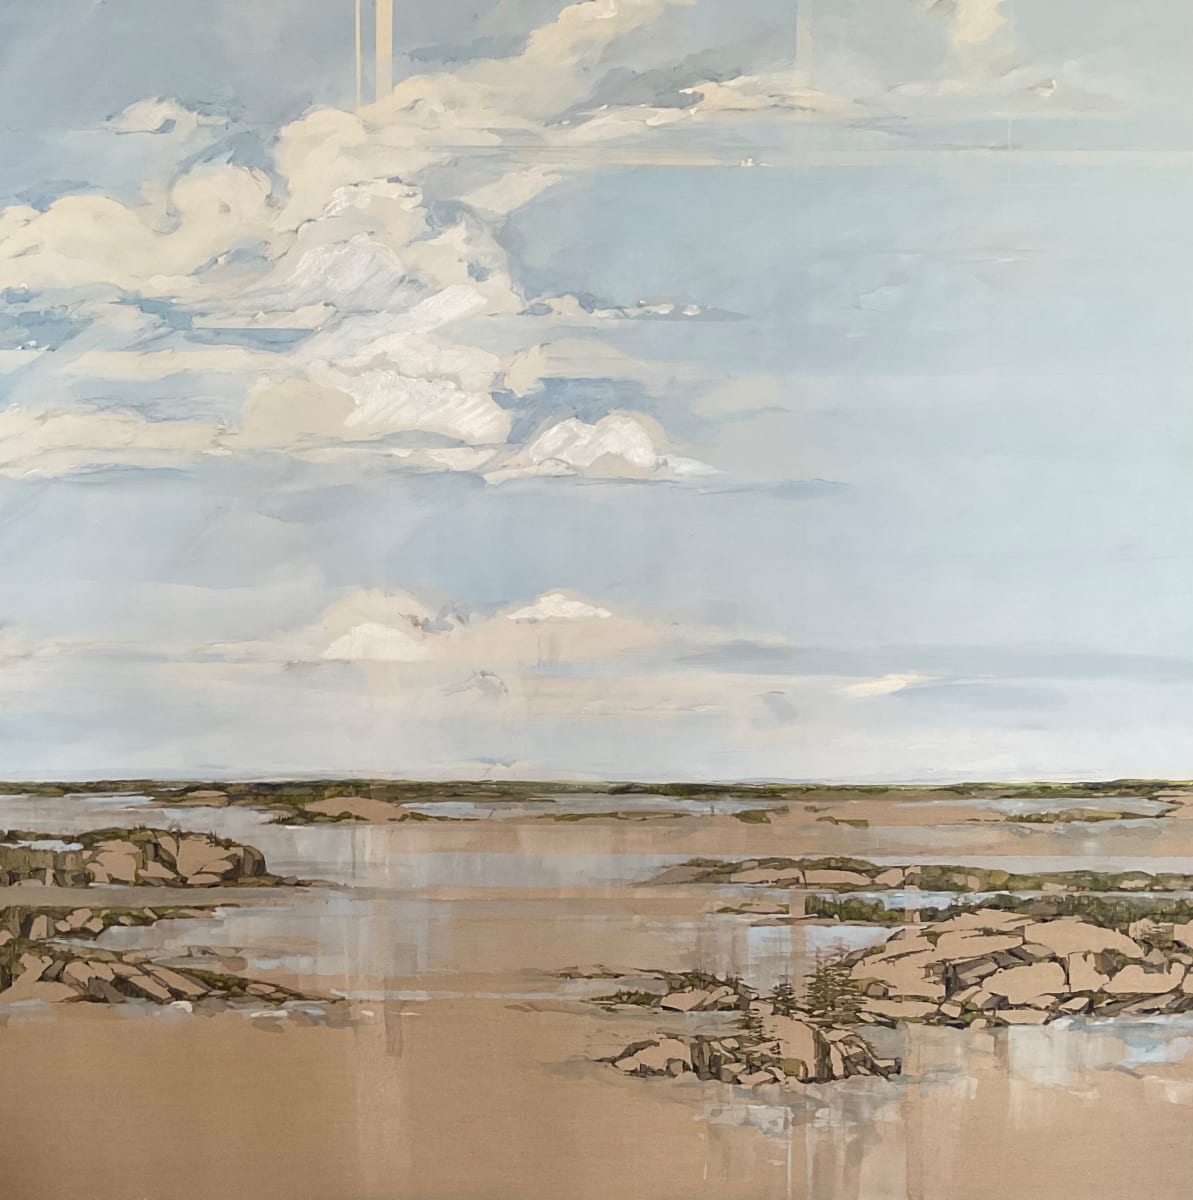 Ponds, Bonavista Peninsula by BarbaraHouston ArtStudio  Image: 72" x 72", acrylic + sepia in on seamed cotton canvas (sky) + Belgian linen (ground)